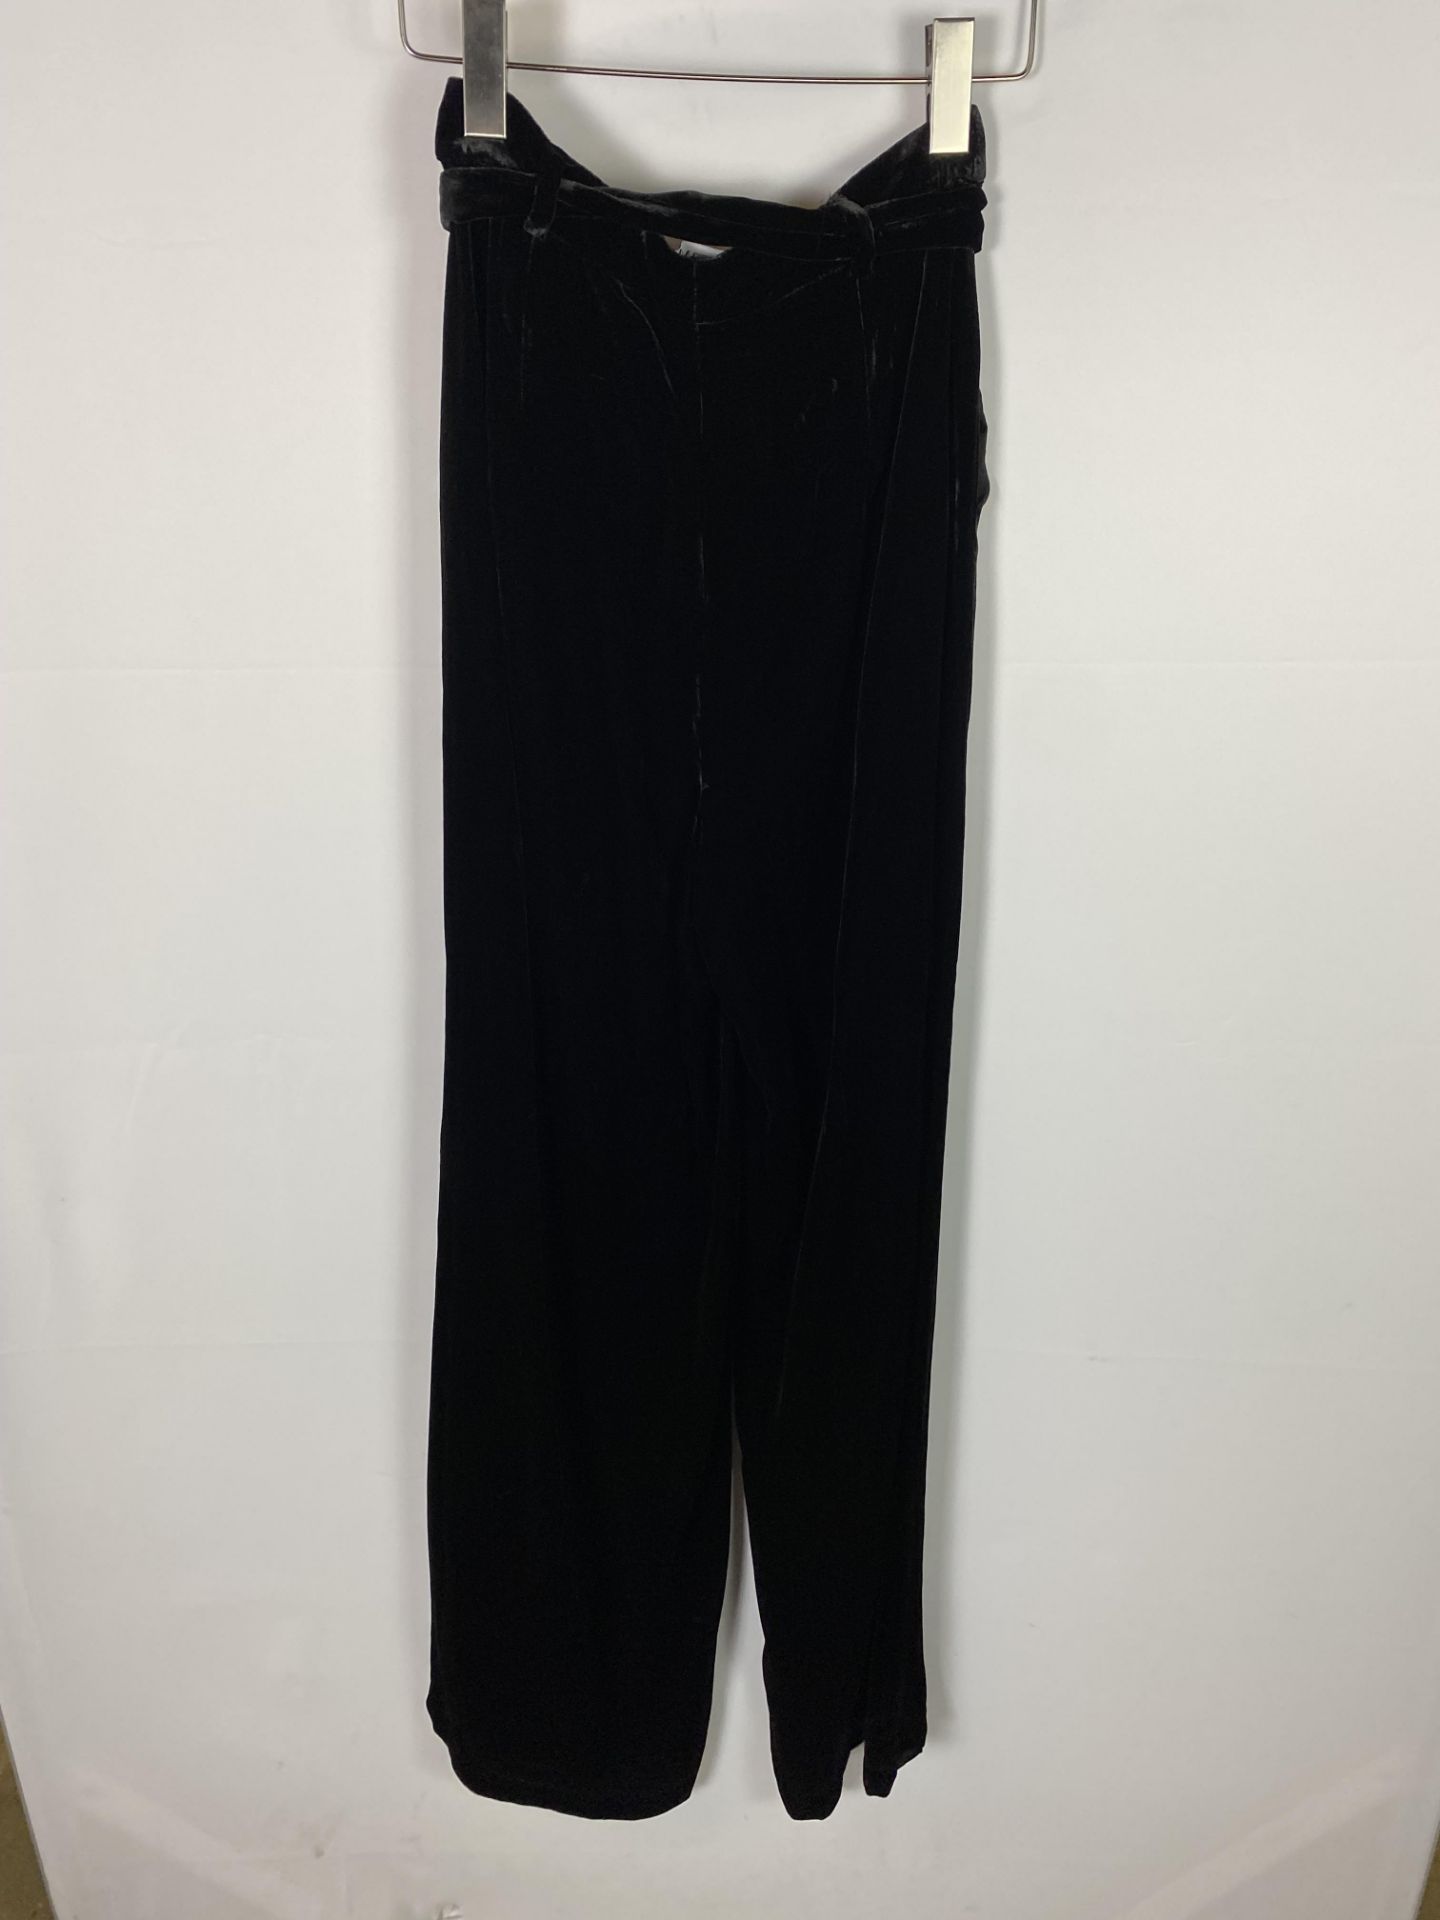 Black Chelsie Velvet Pants w/Sache, Size 2, Original Retail Price: $278